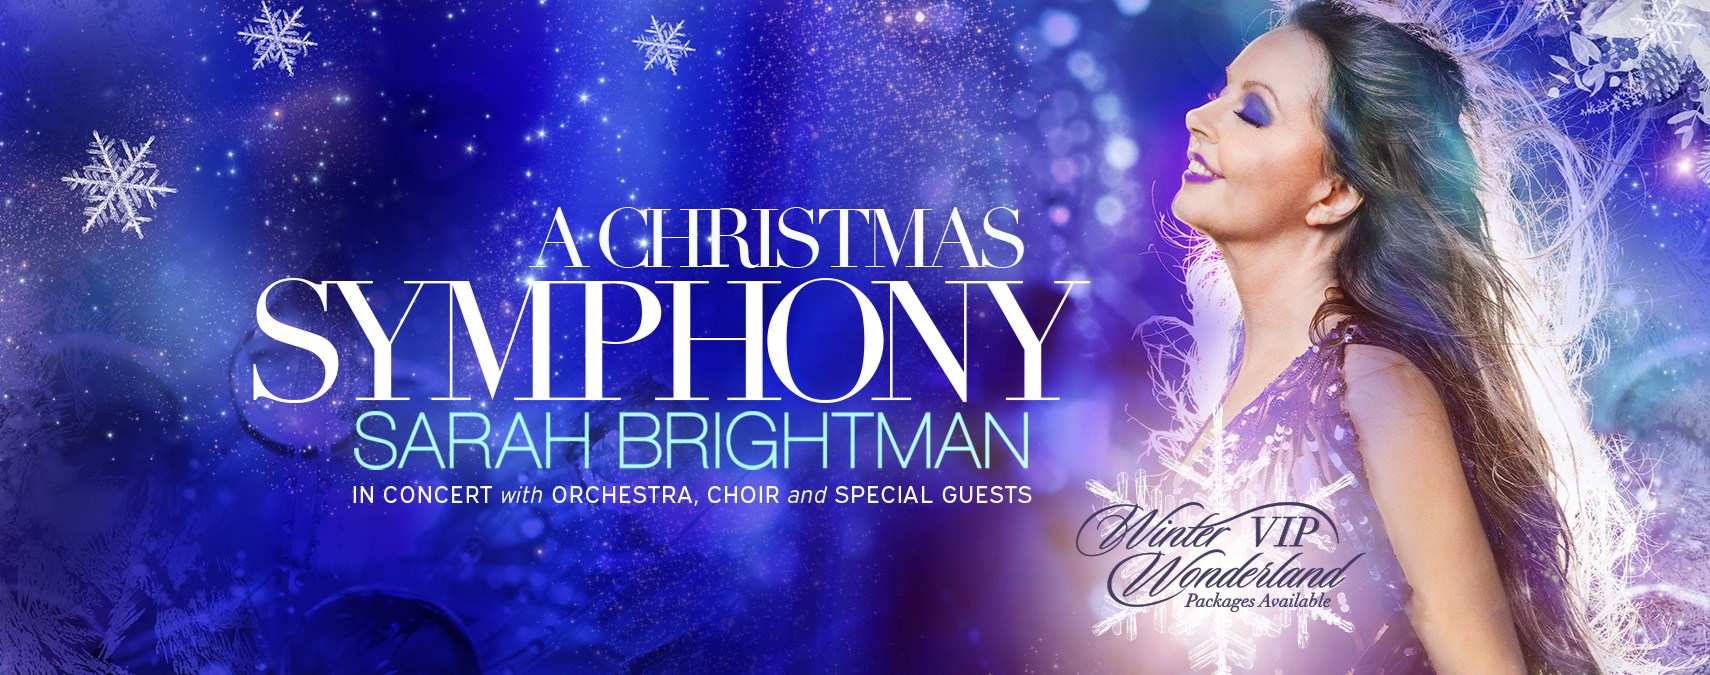 Sarah Brightman-A Christmas Symphony